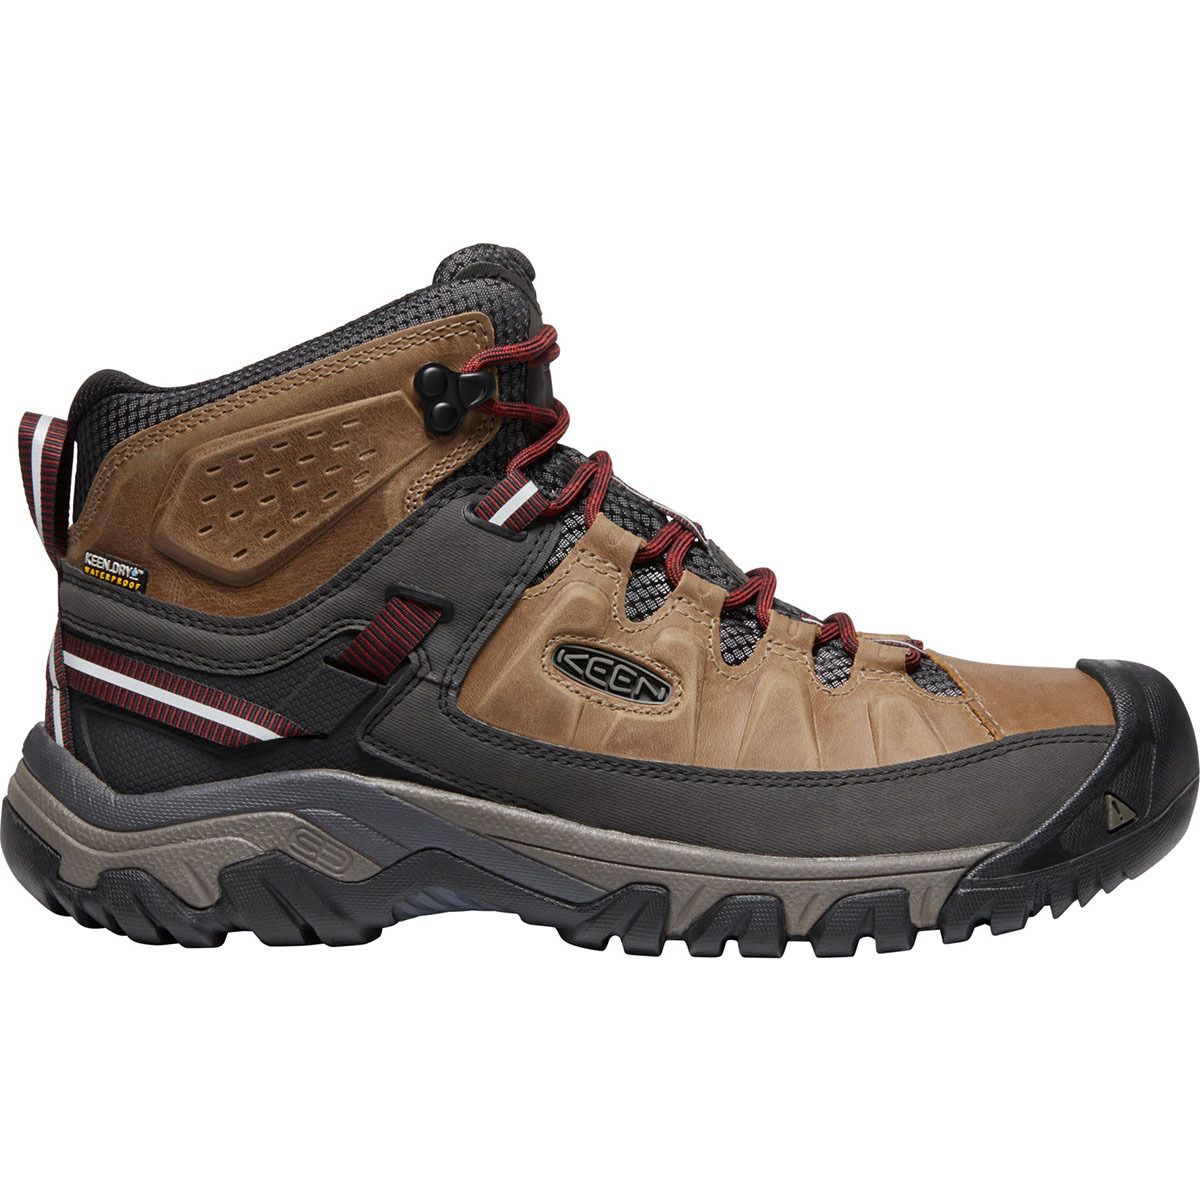 Targhee III Mid Leather Waterproof Hiking Boot - Men